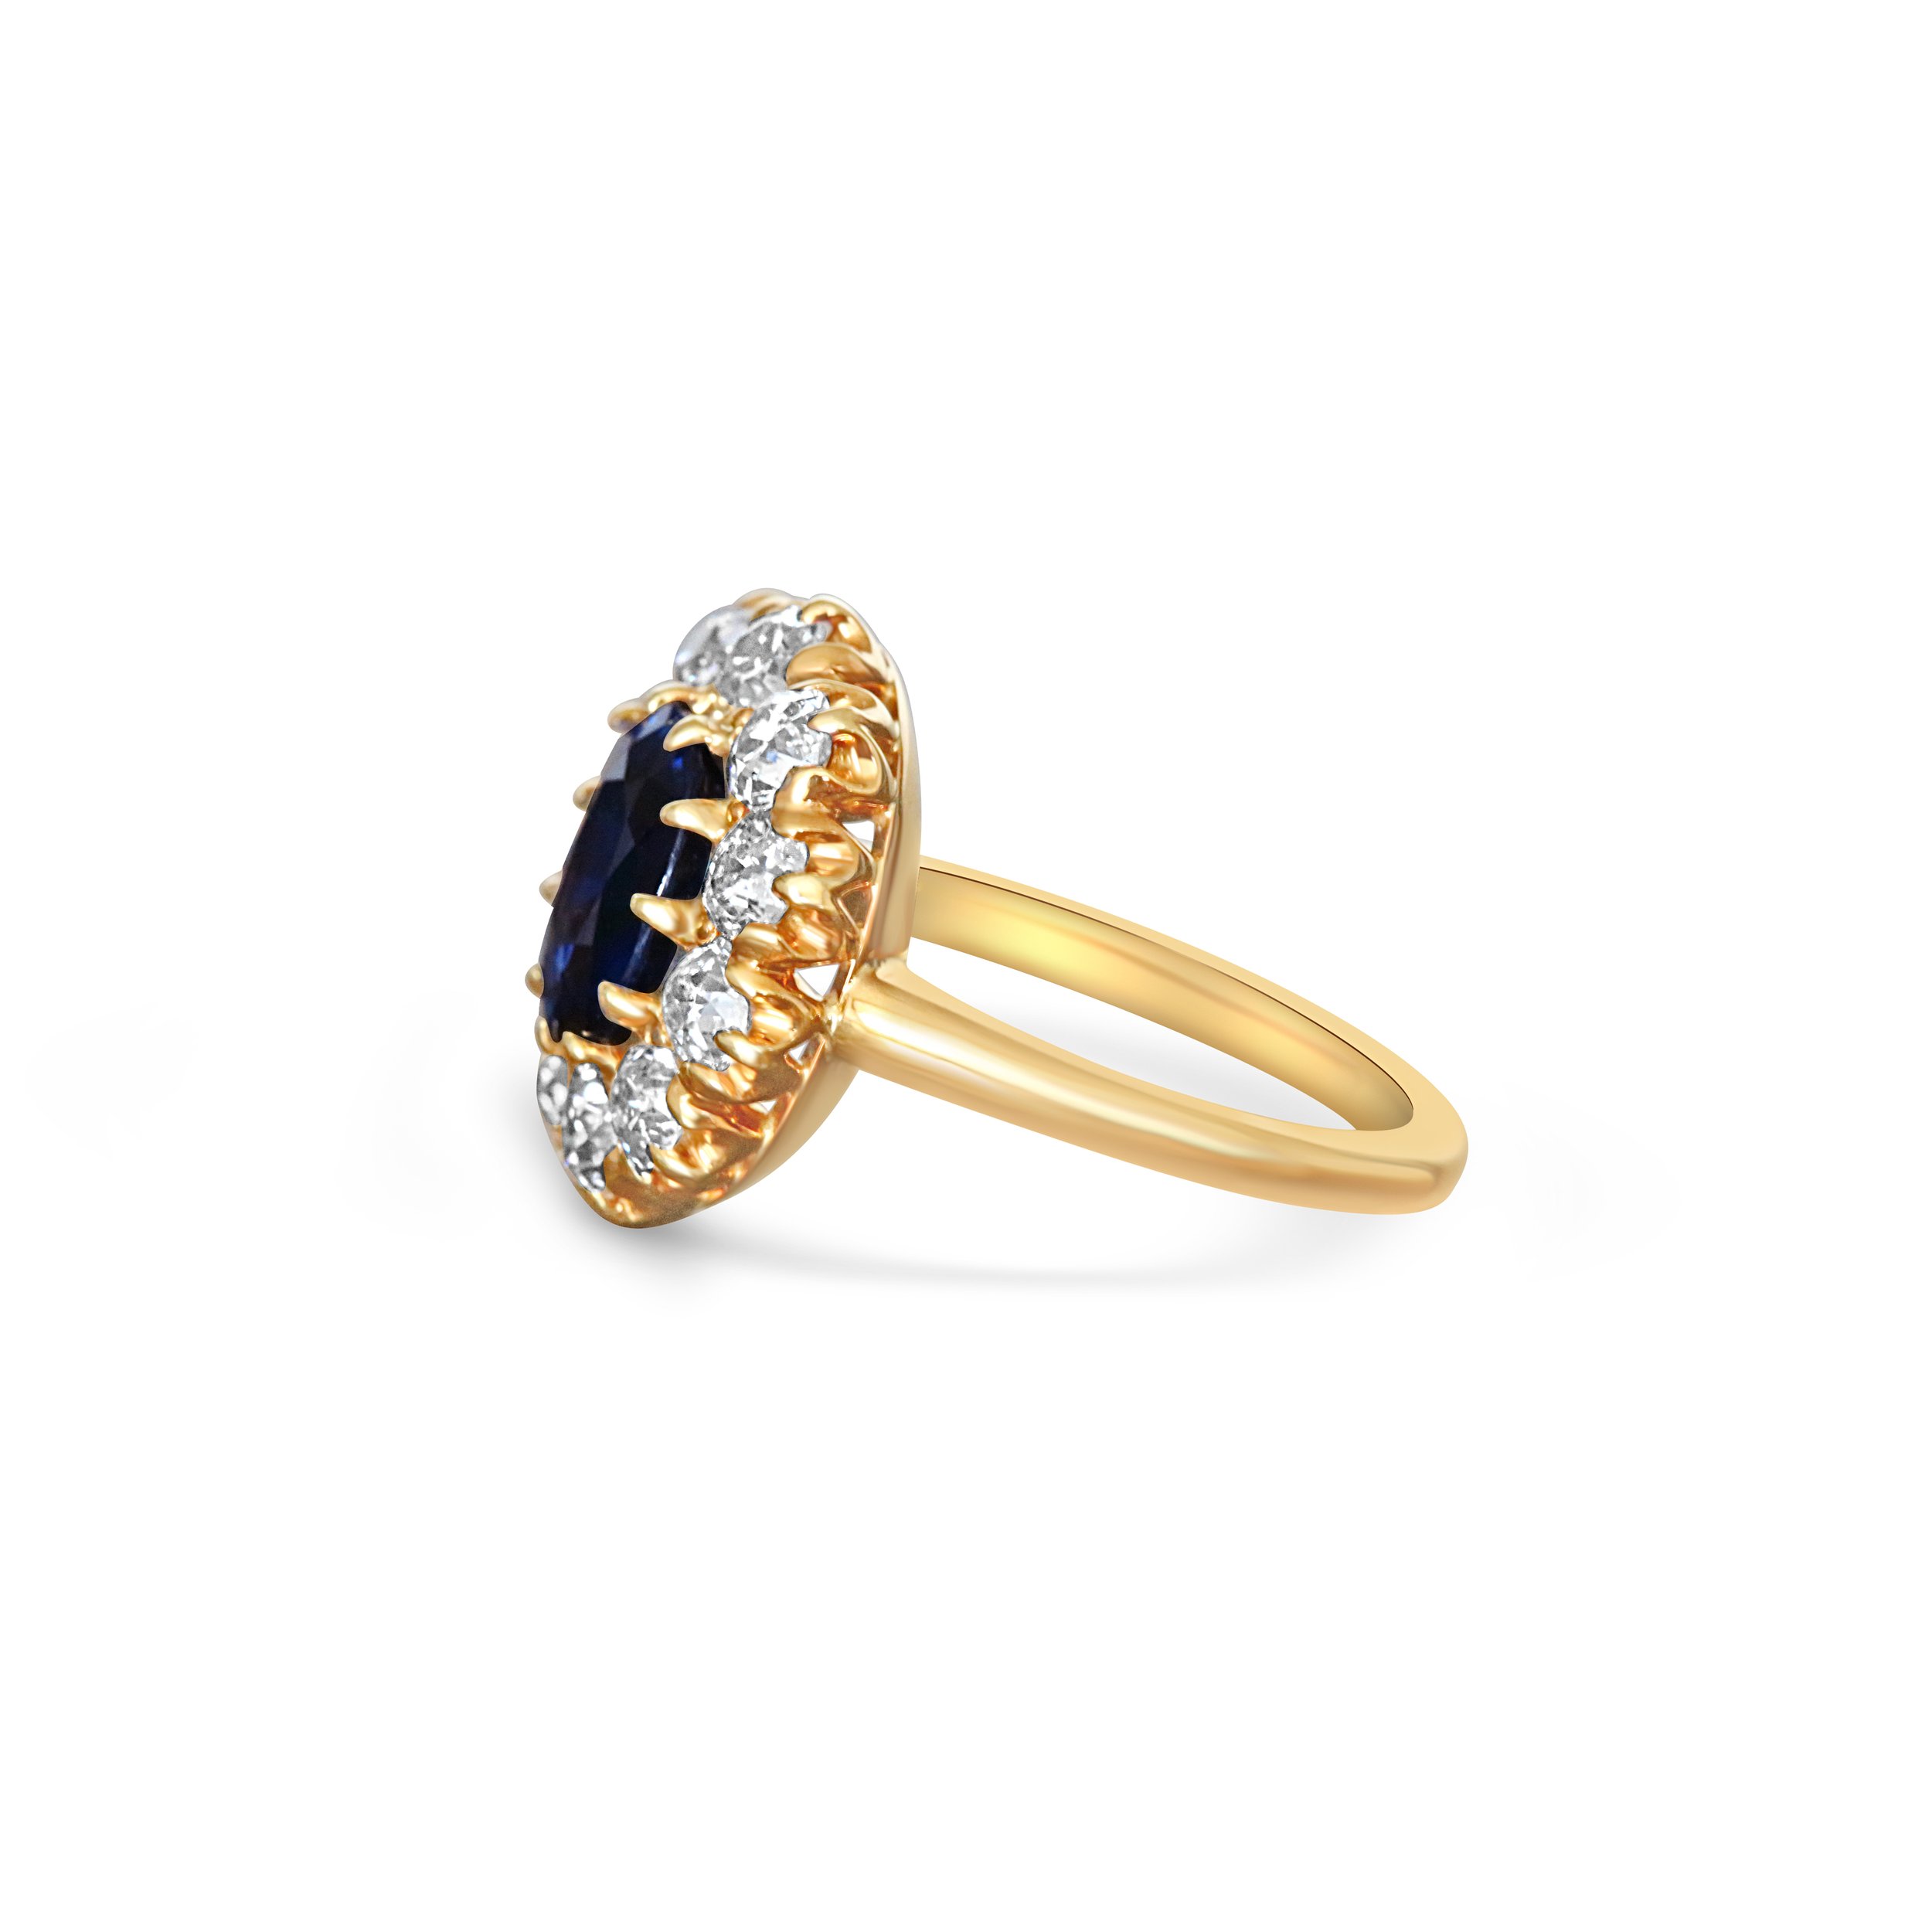 C 2.60 Burma Sapphire Ring.jpg